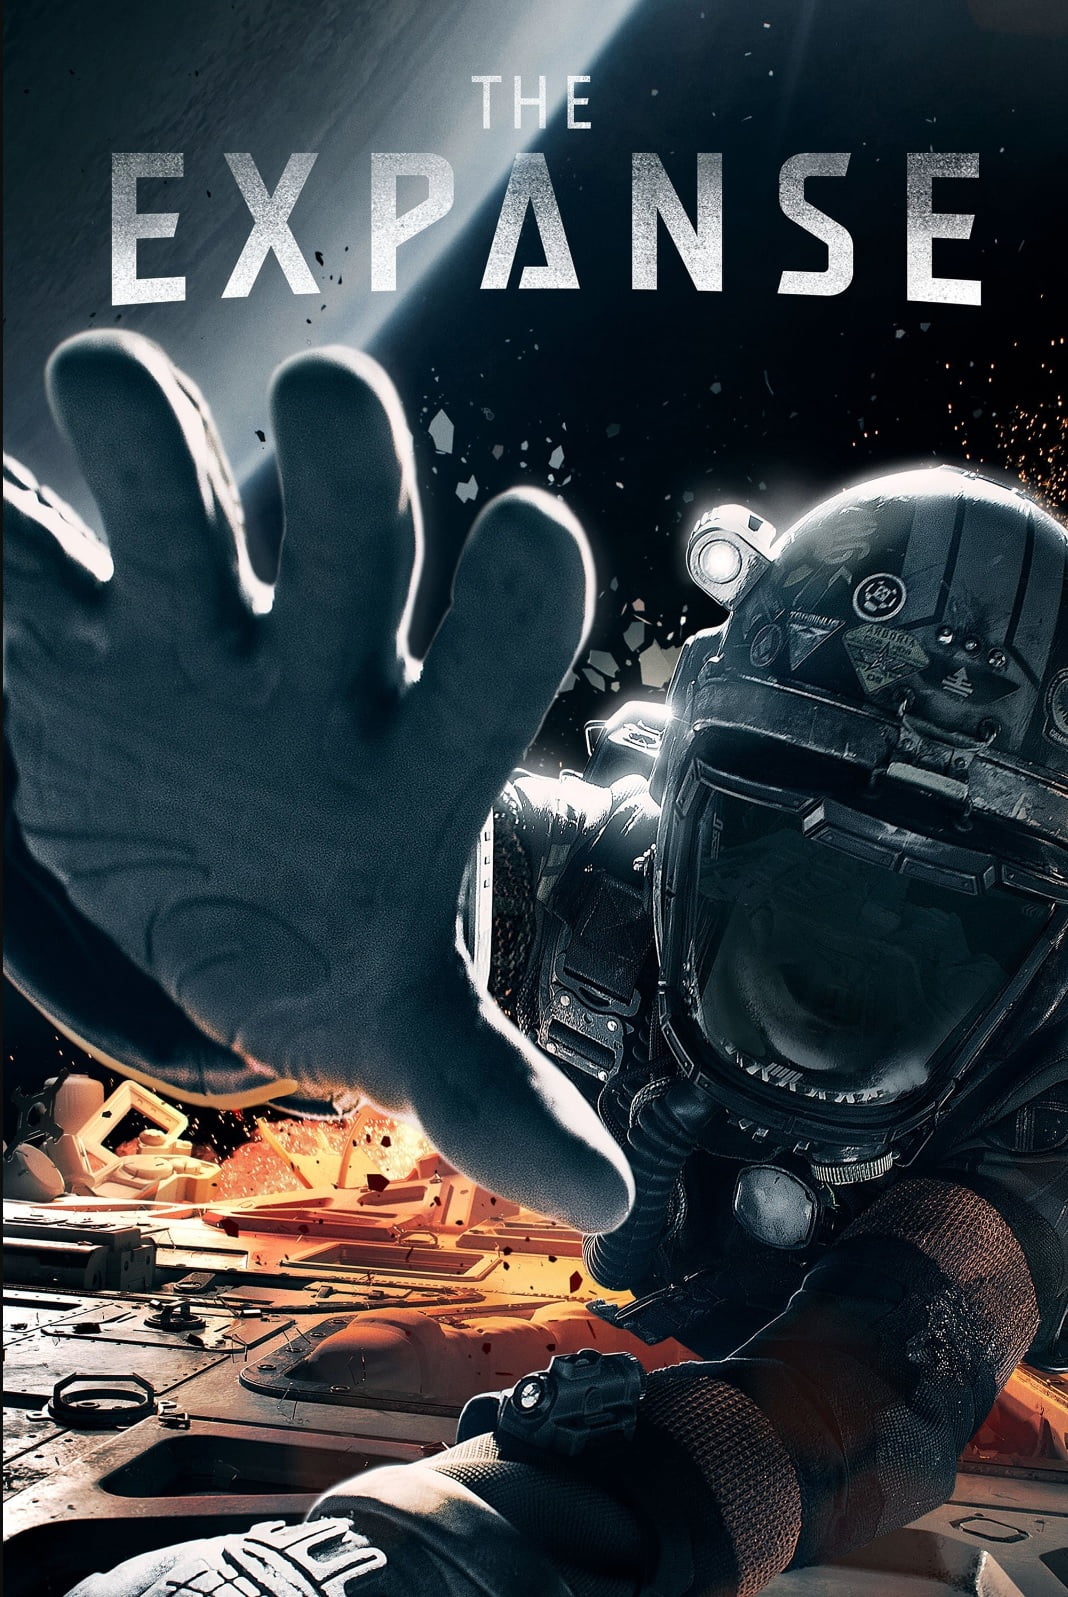 Plakát pro film “Expanze”